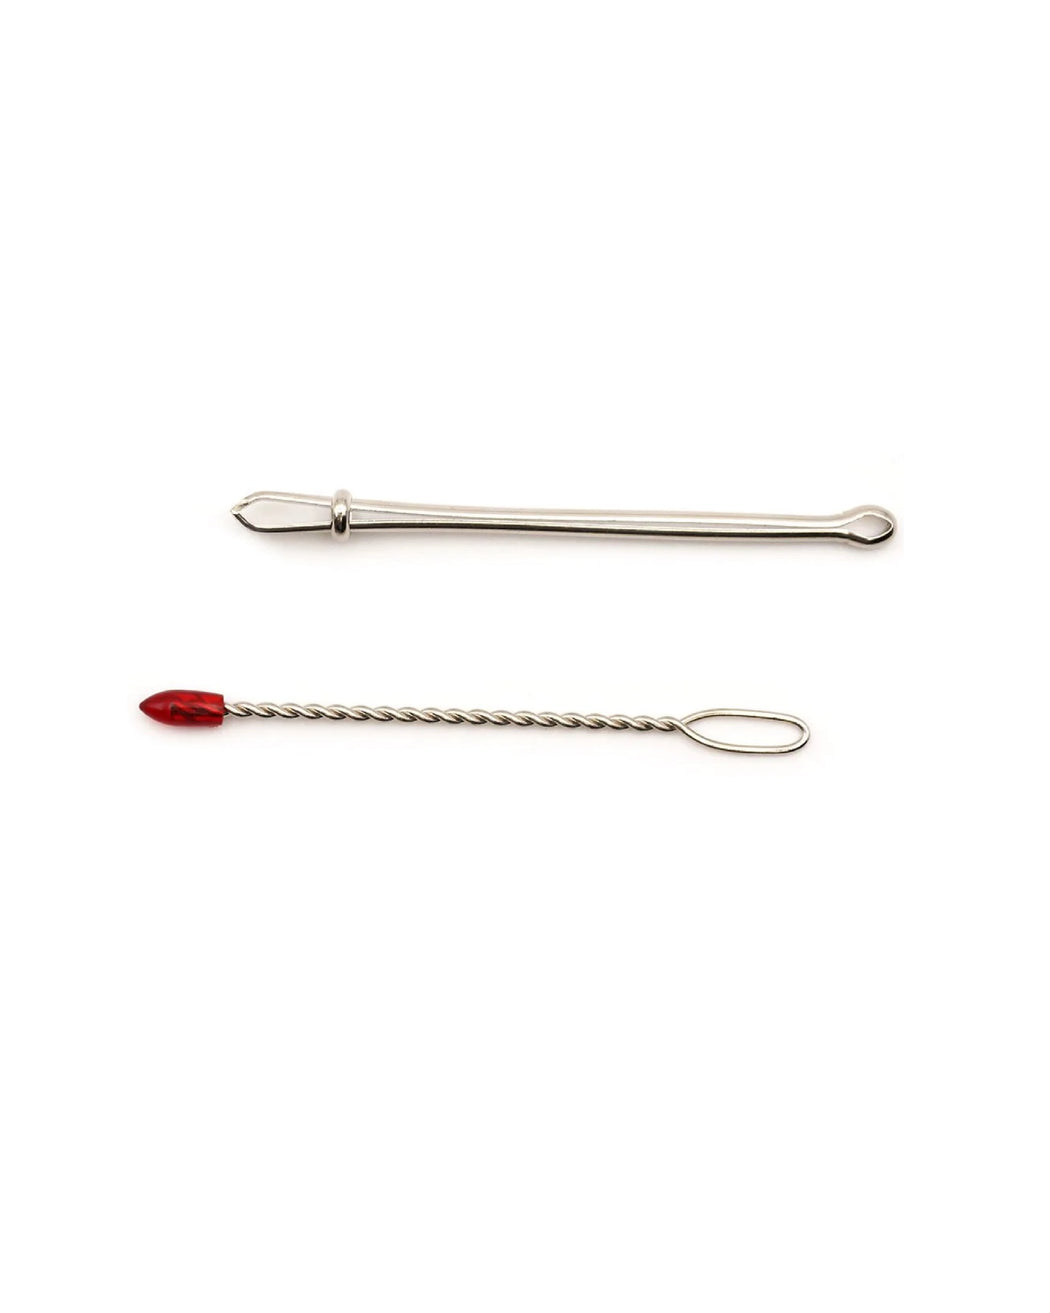 Bodkin (2 Types) - Zipper and Thread